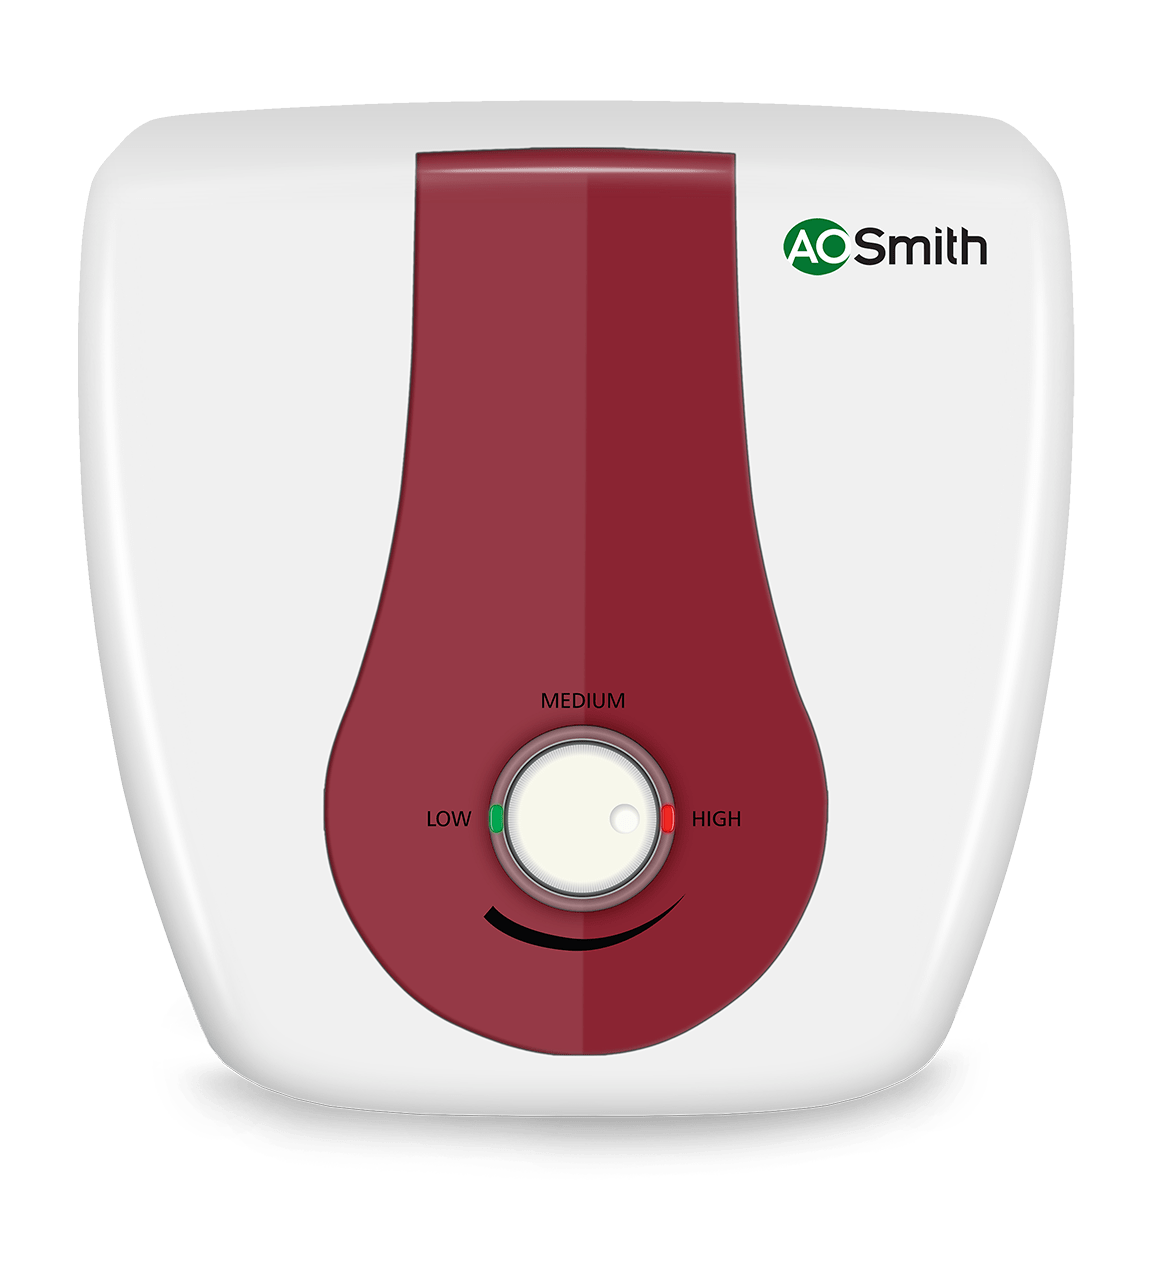 AOSmith - SGS Storage Water Heater